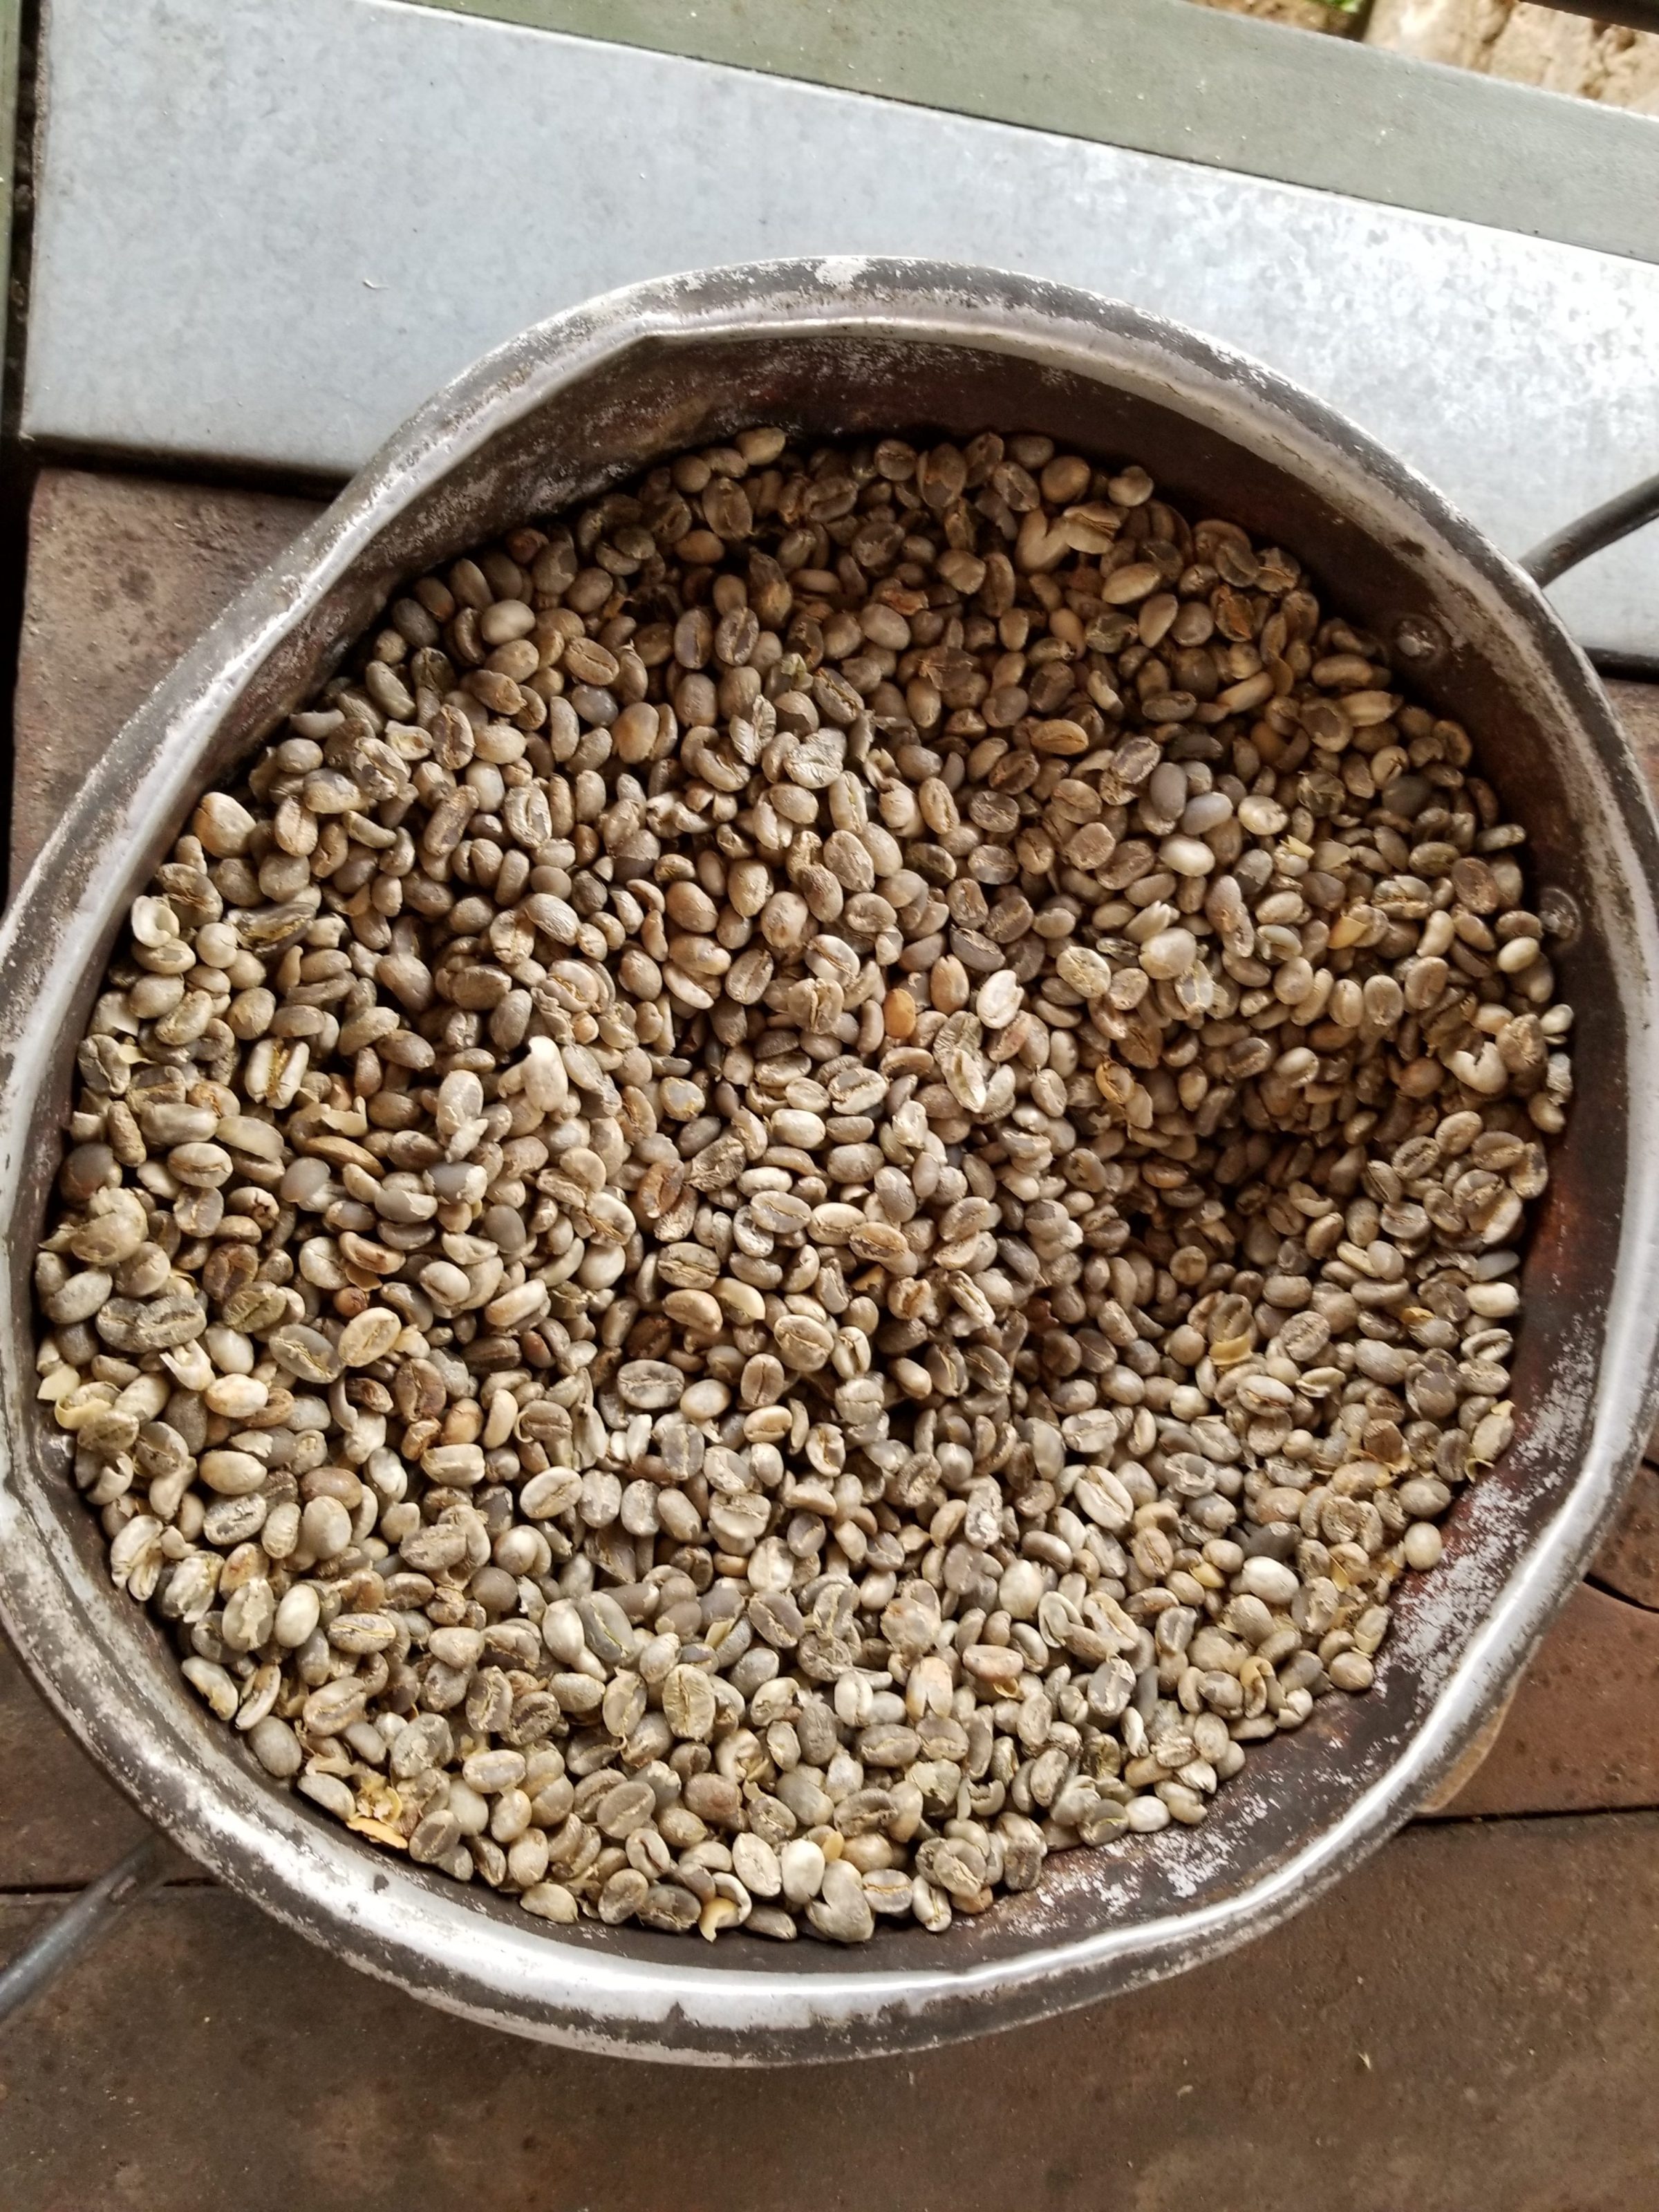 Dried coffee beans